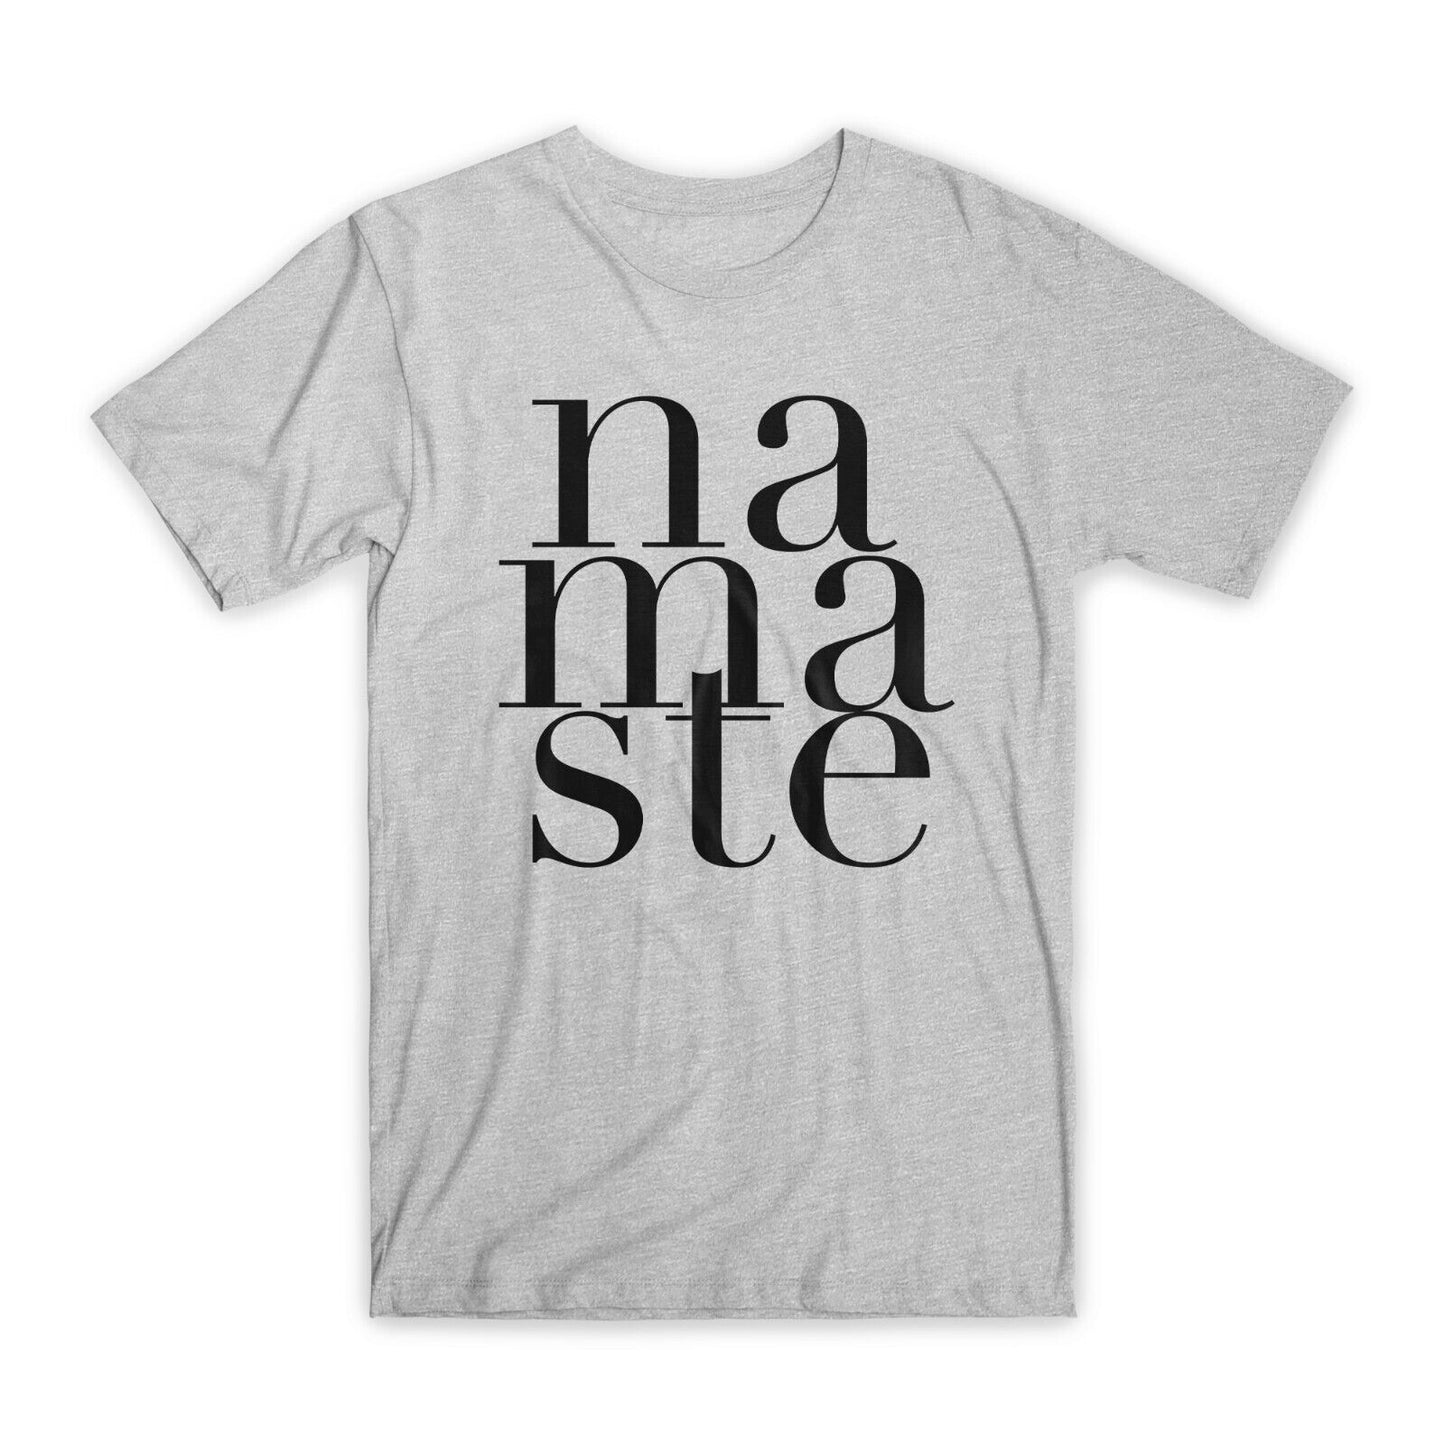 Namaste Printed T-Shirt Premium Soft Cotton Crew Neck Funny Tee Novelty Gift NEW